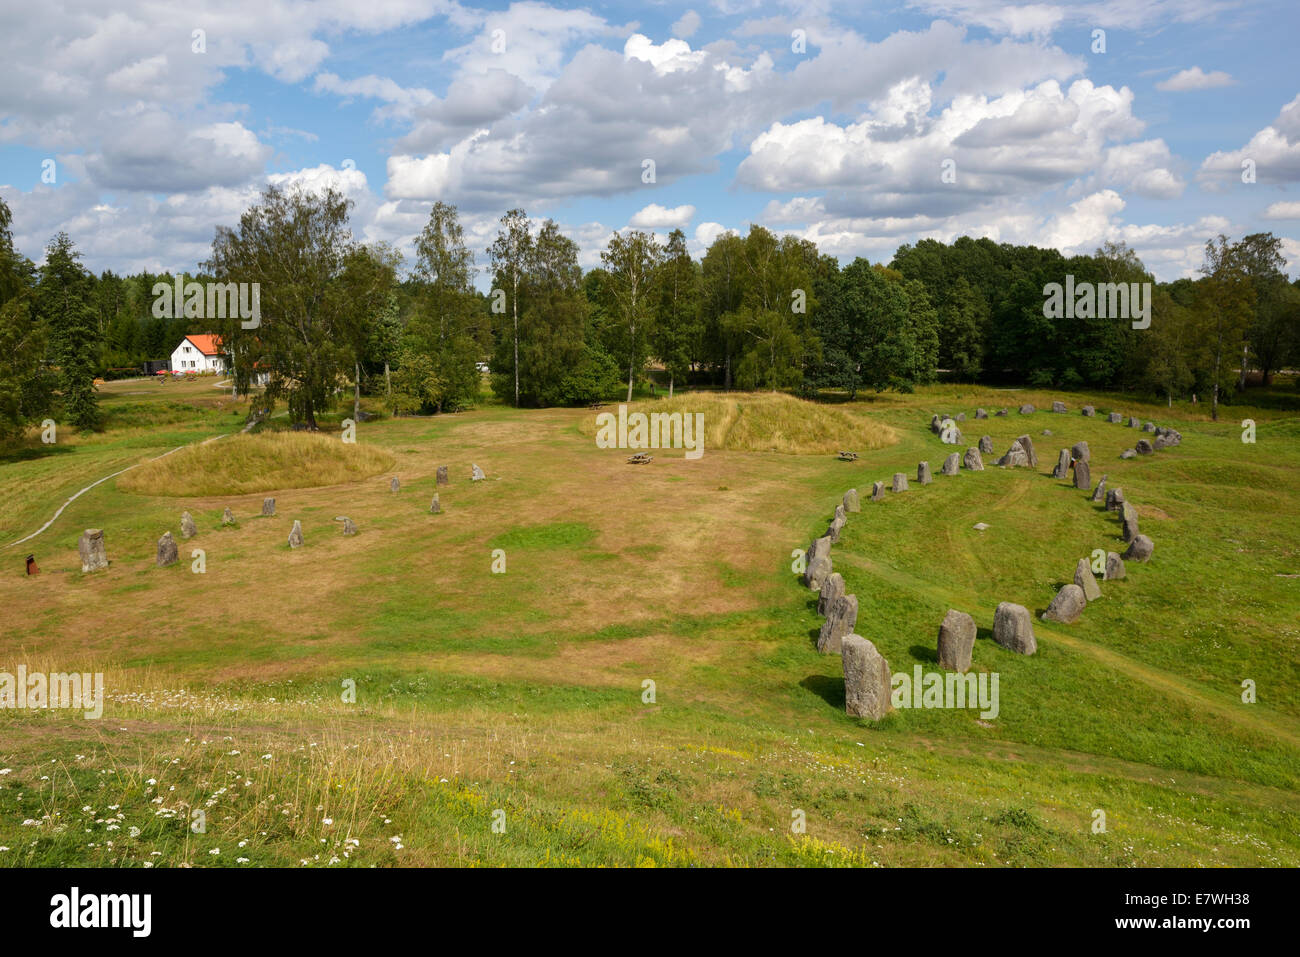 Tumulus and Ship shaped stone burials, Anundshög, Västerås, Sweden 140812 62023 Stock Photo